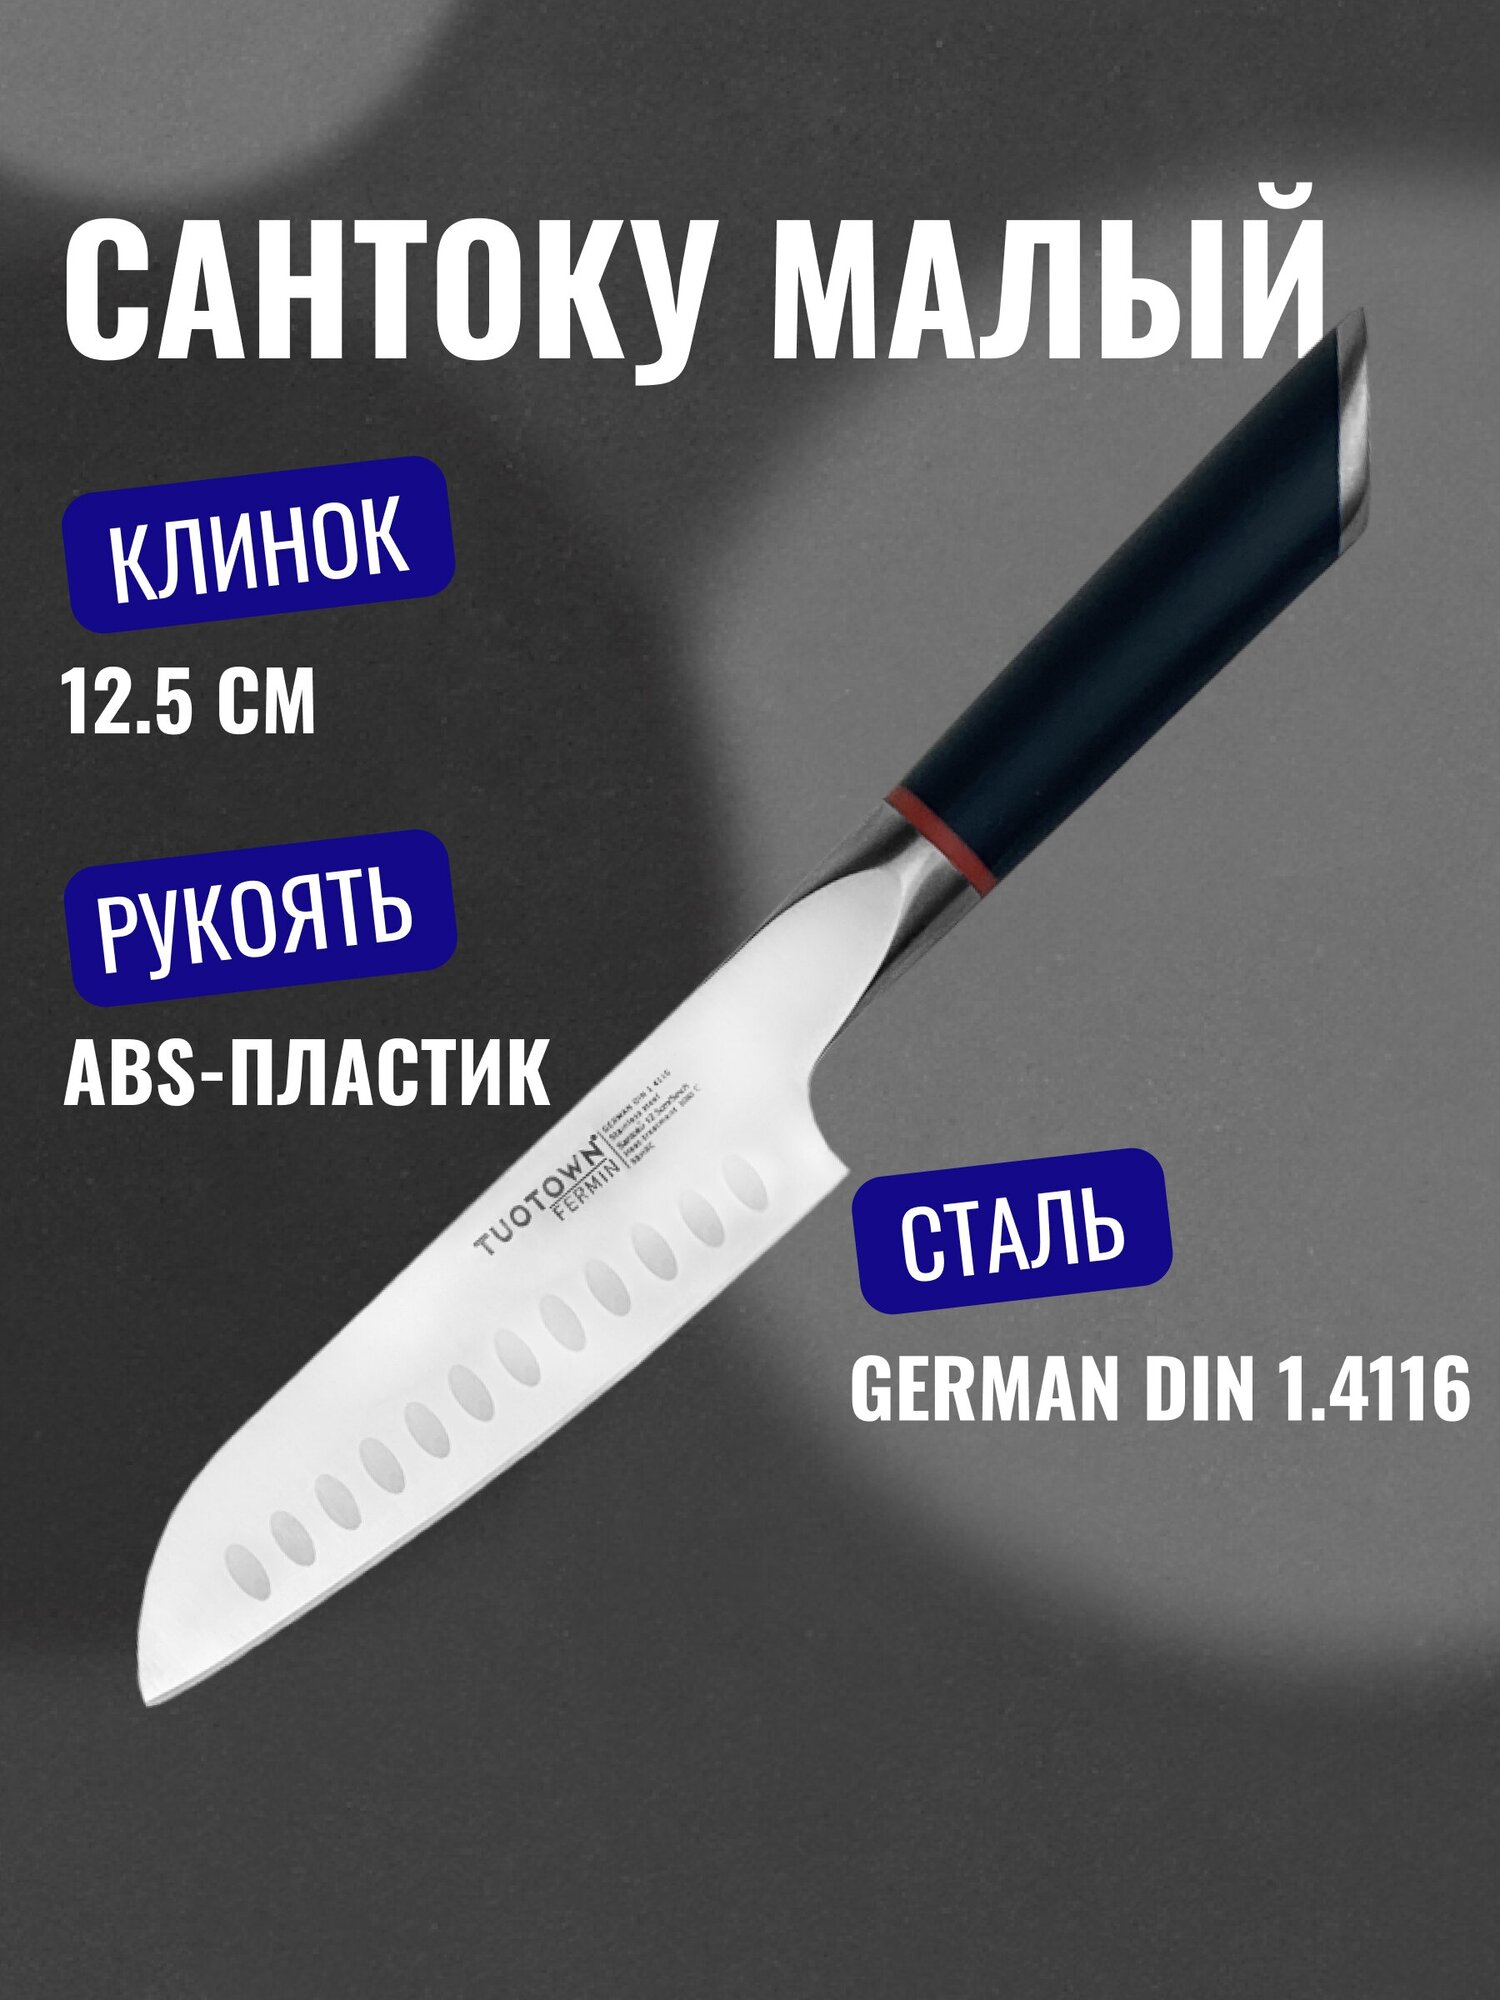 Кухонный нож малый Сантоку TUOTOWN, серия FERMIN